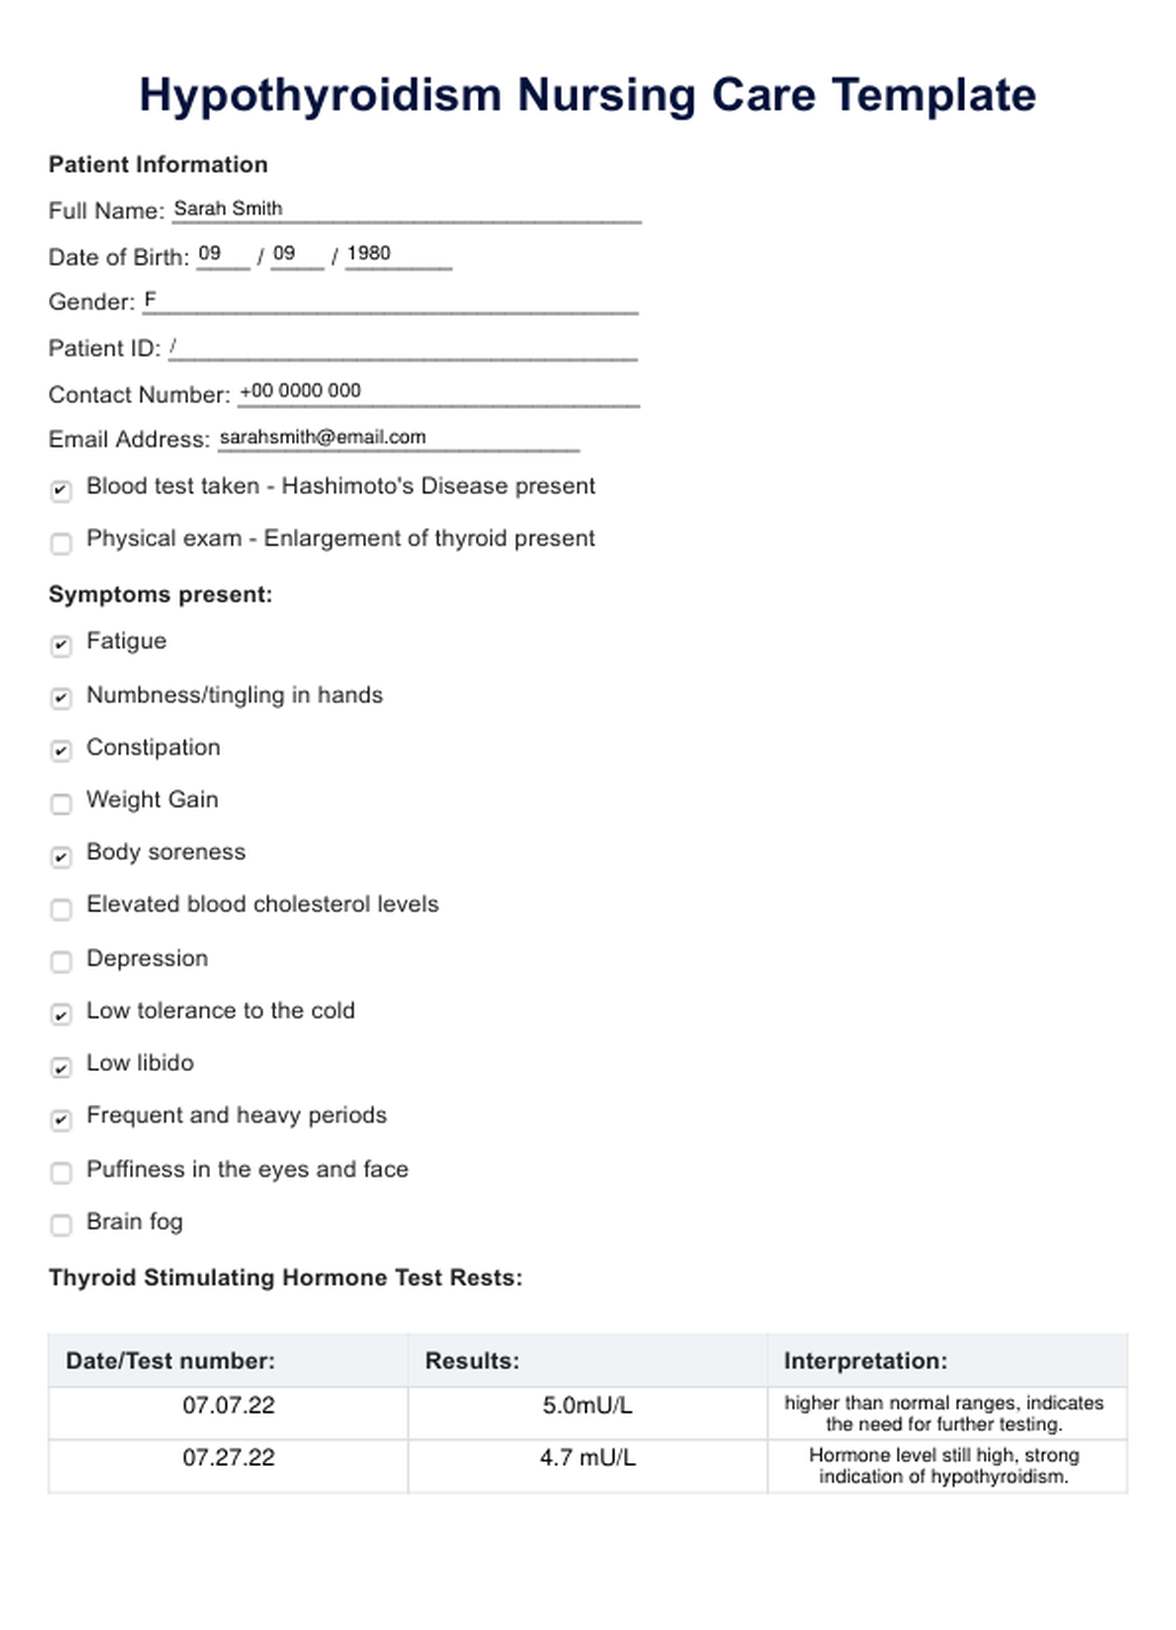 Hypothyroidism Nursing Care Plan PDF Example